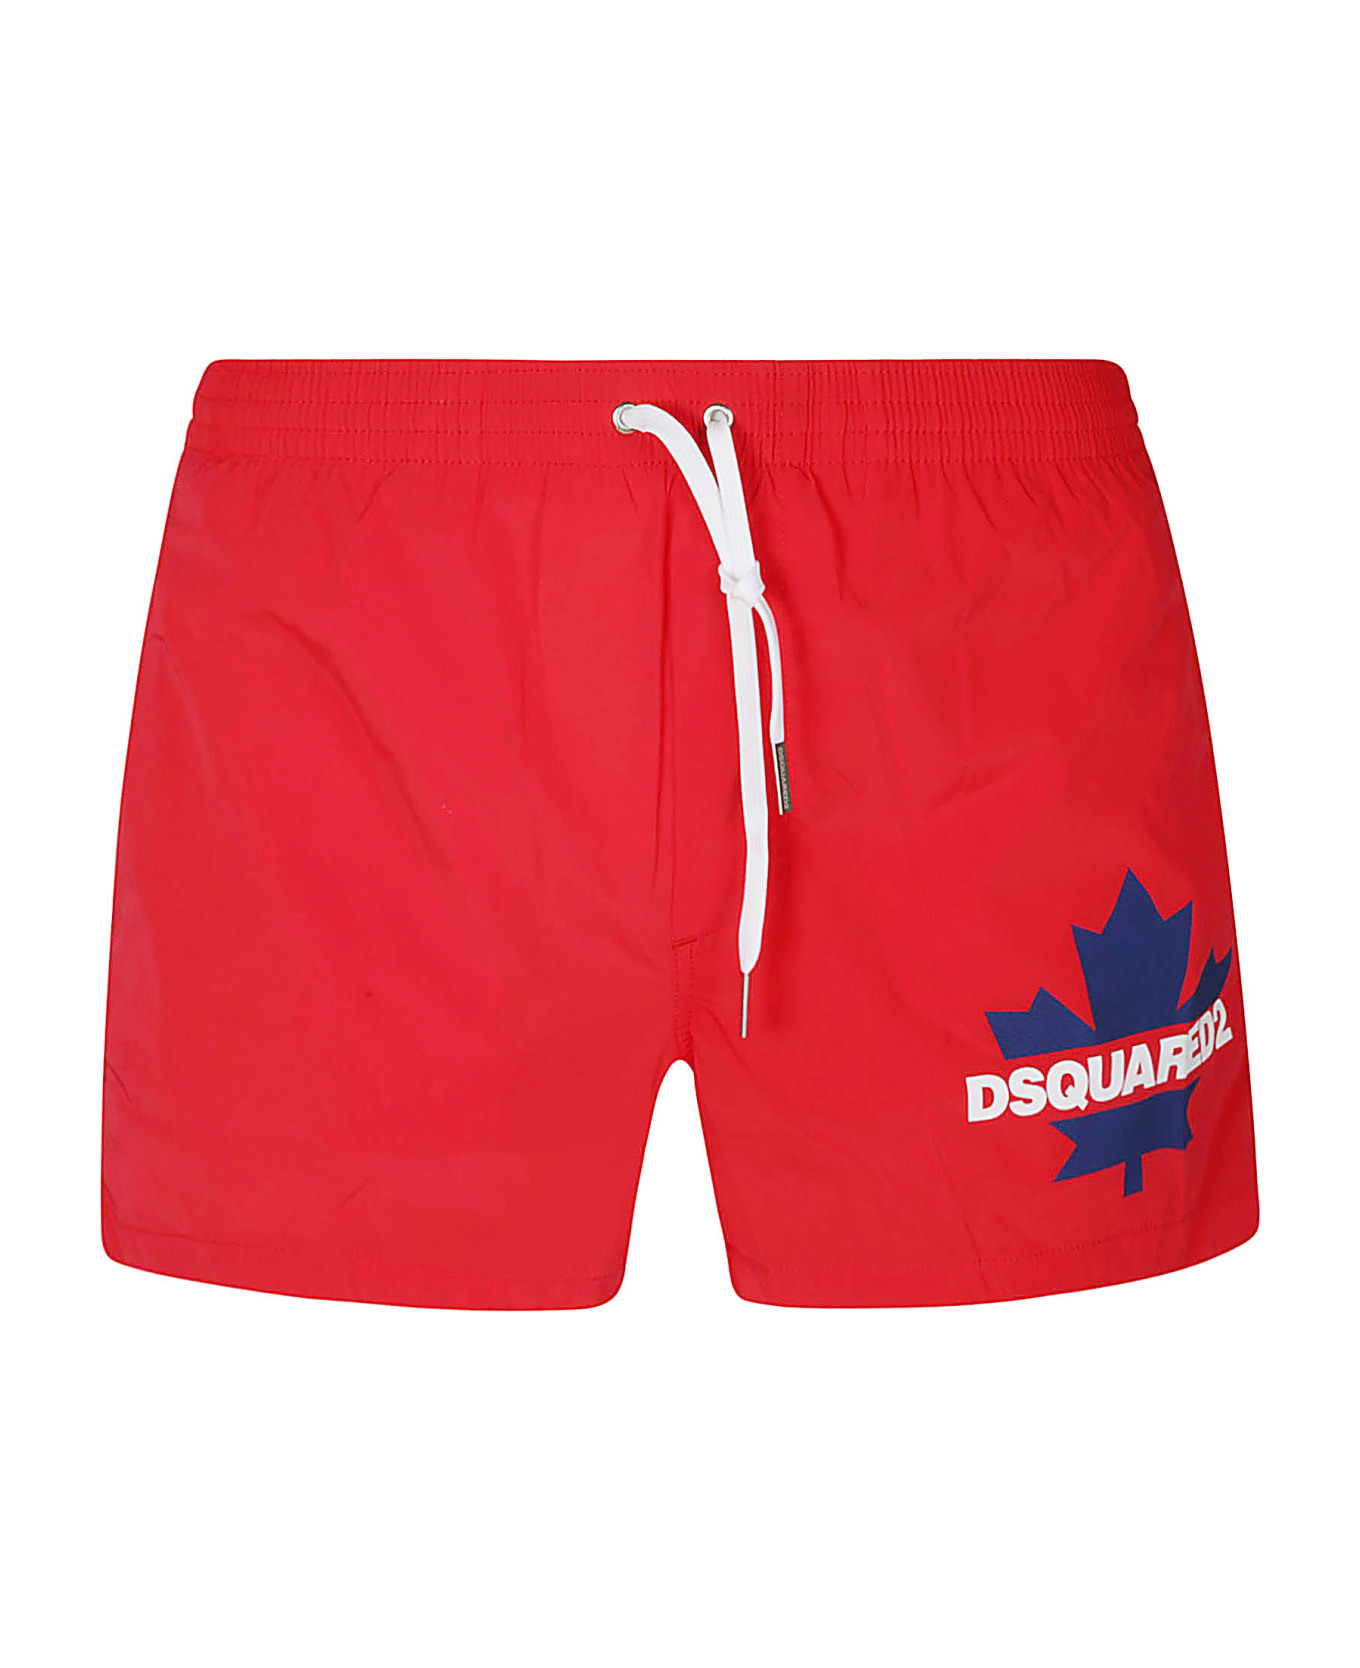 Dsquared2 Leaf Logo Print Swim Shorts - Red ショートパンツ